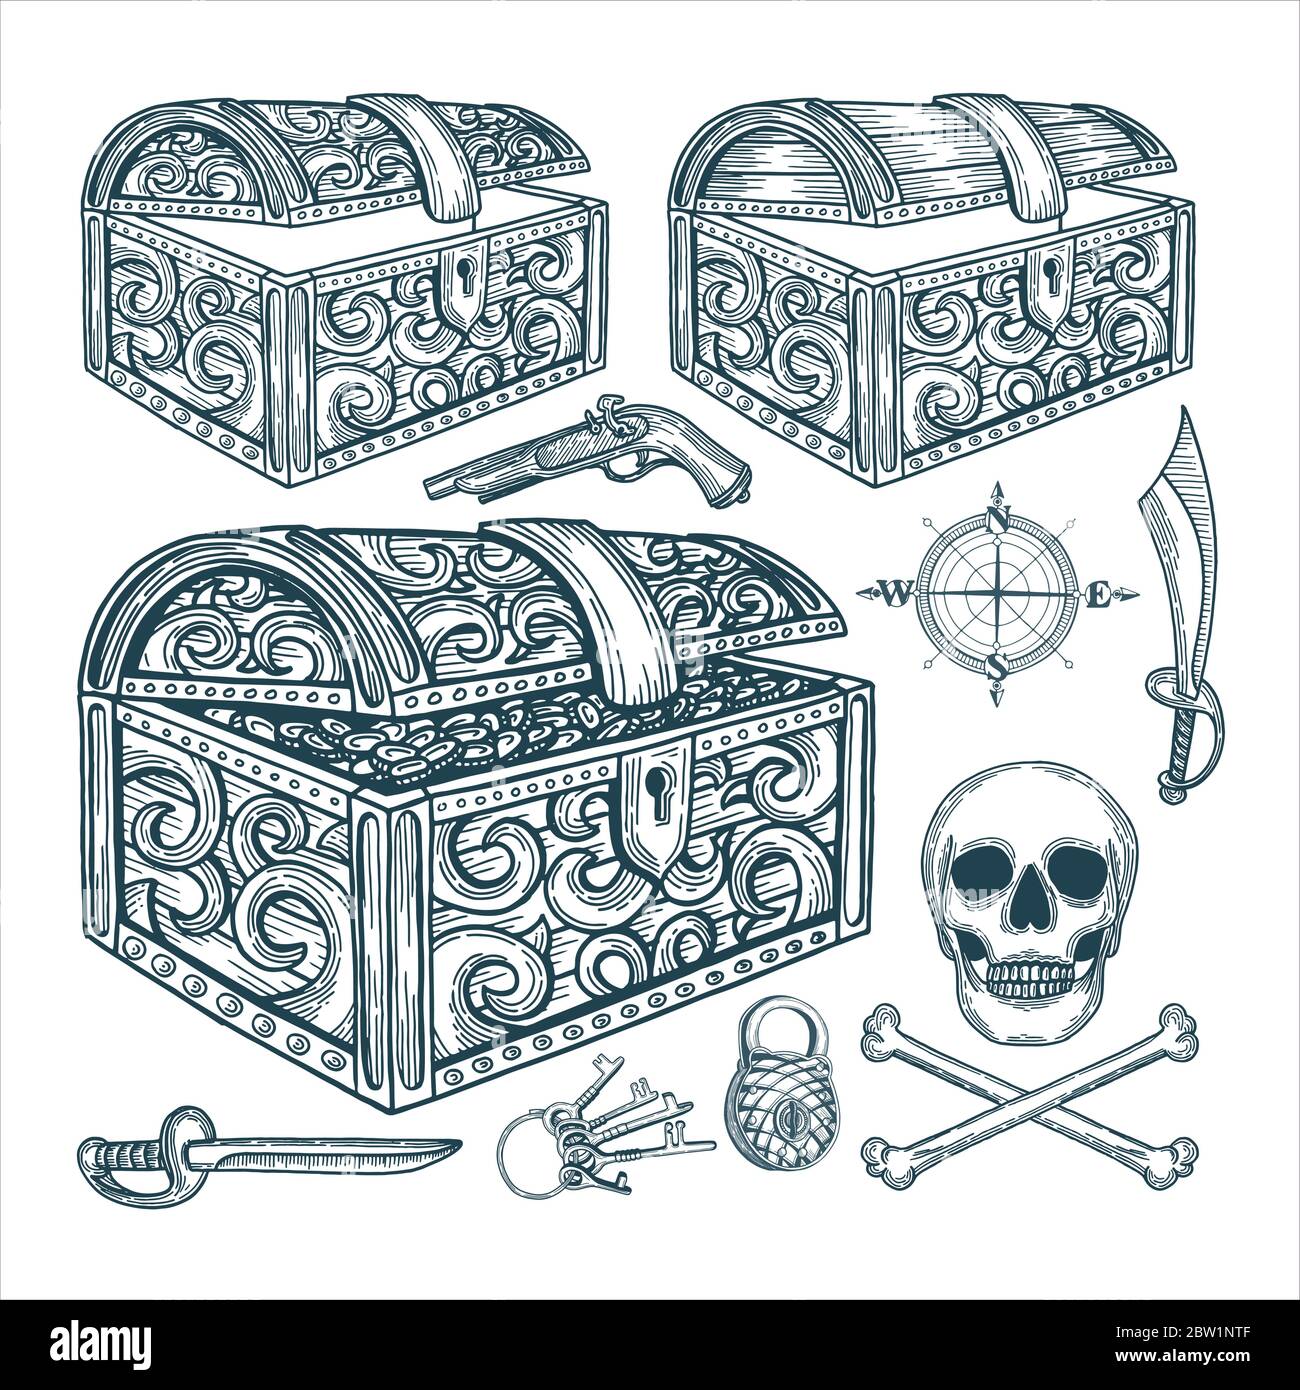 Skull Island Pirate Treasure Chest